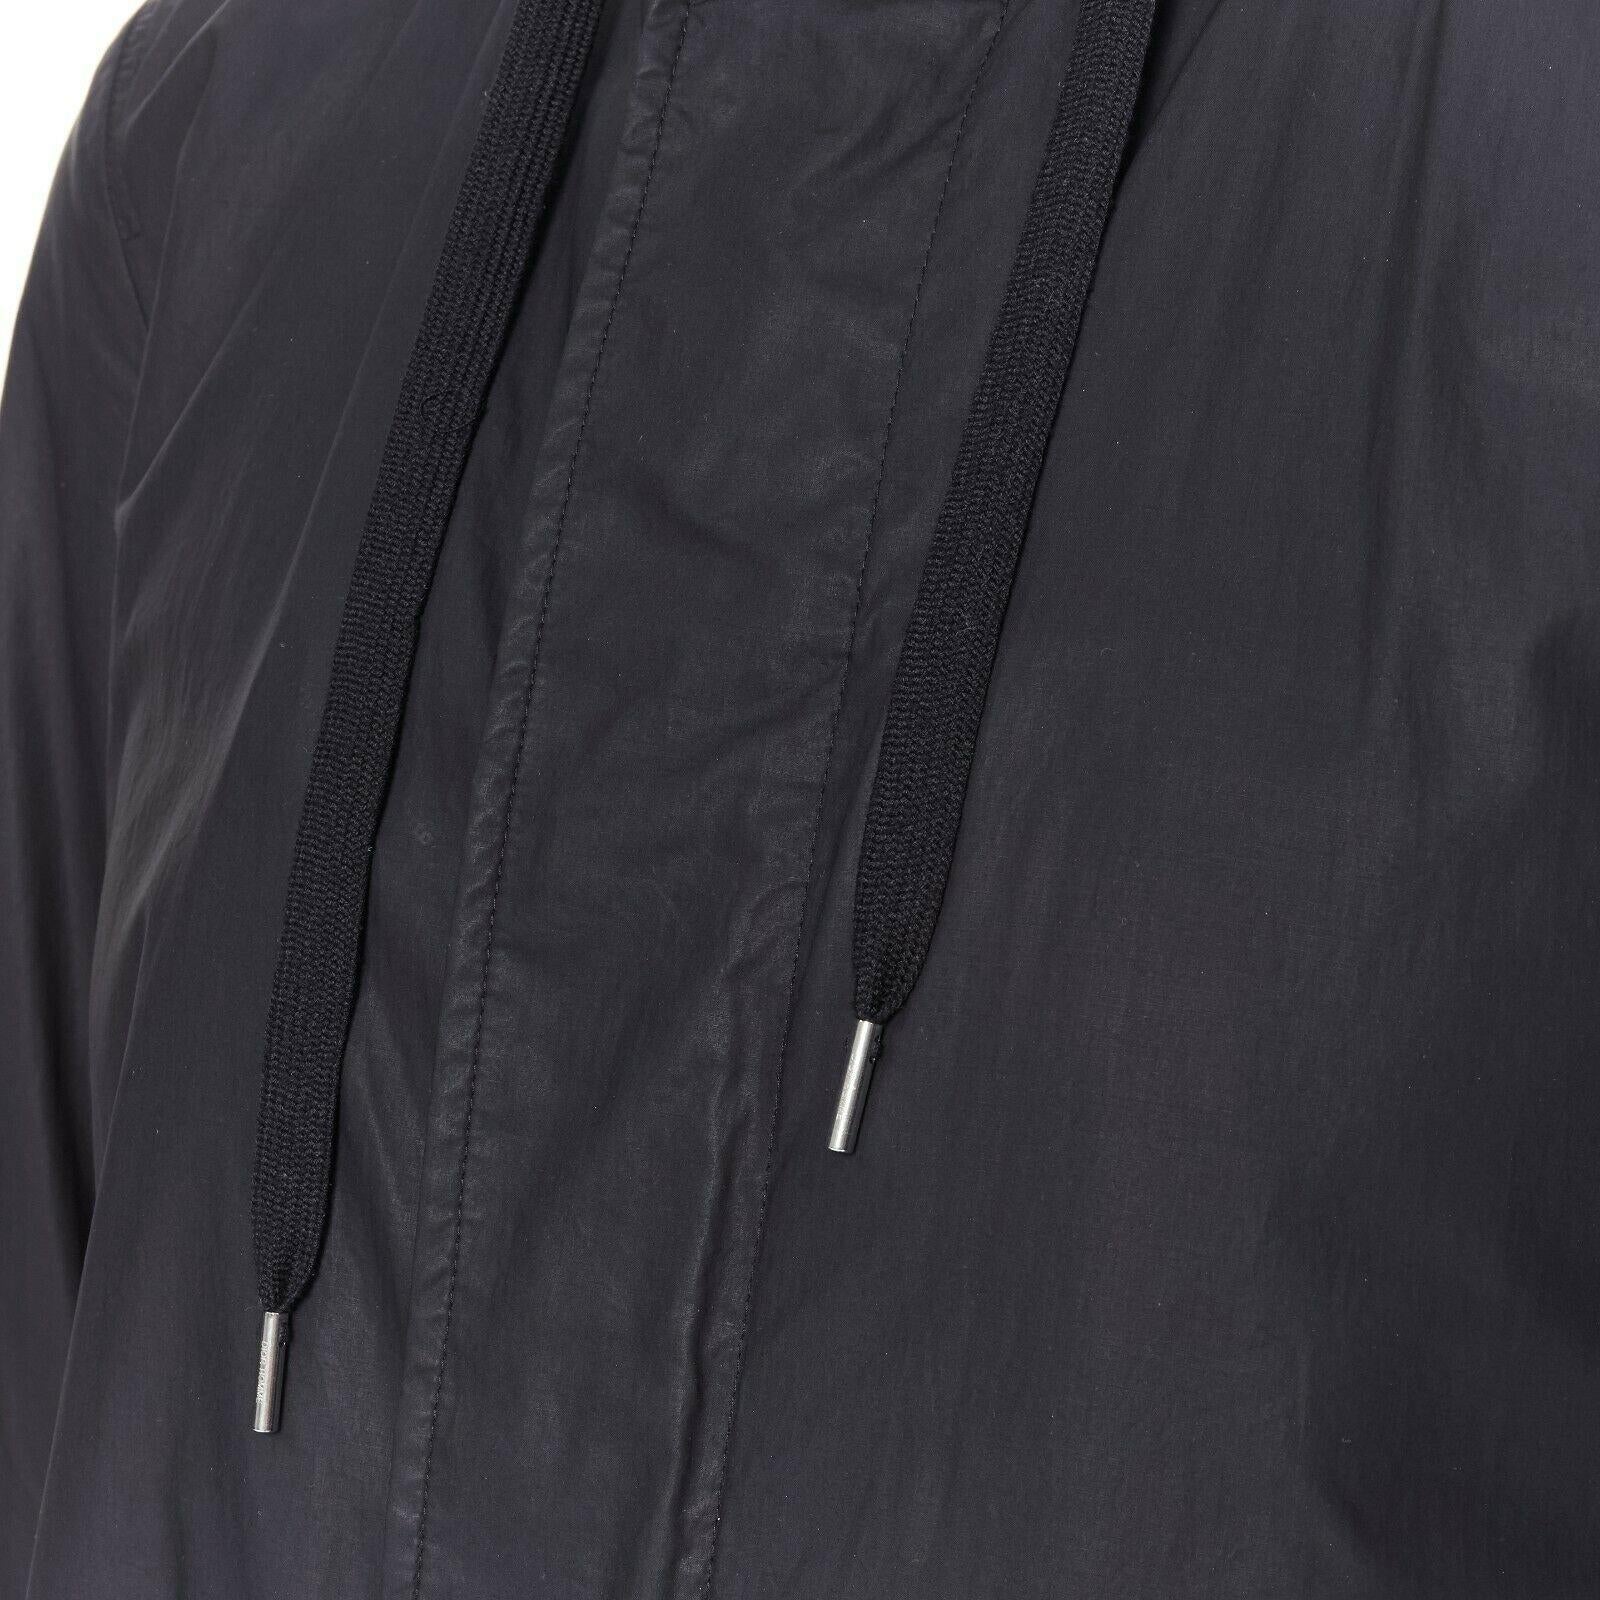 DIOR HOMME black hooded utilitarian drawstrings zipper windbreaker jacket For Sale 3